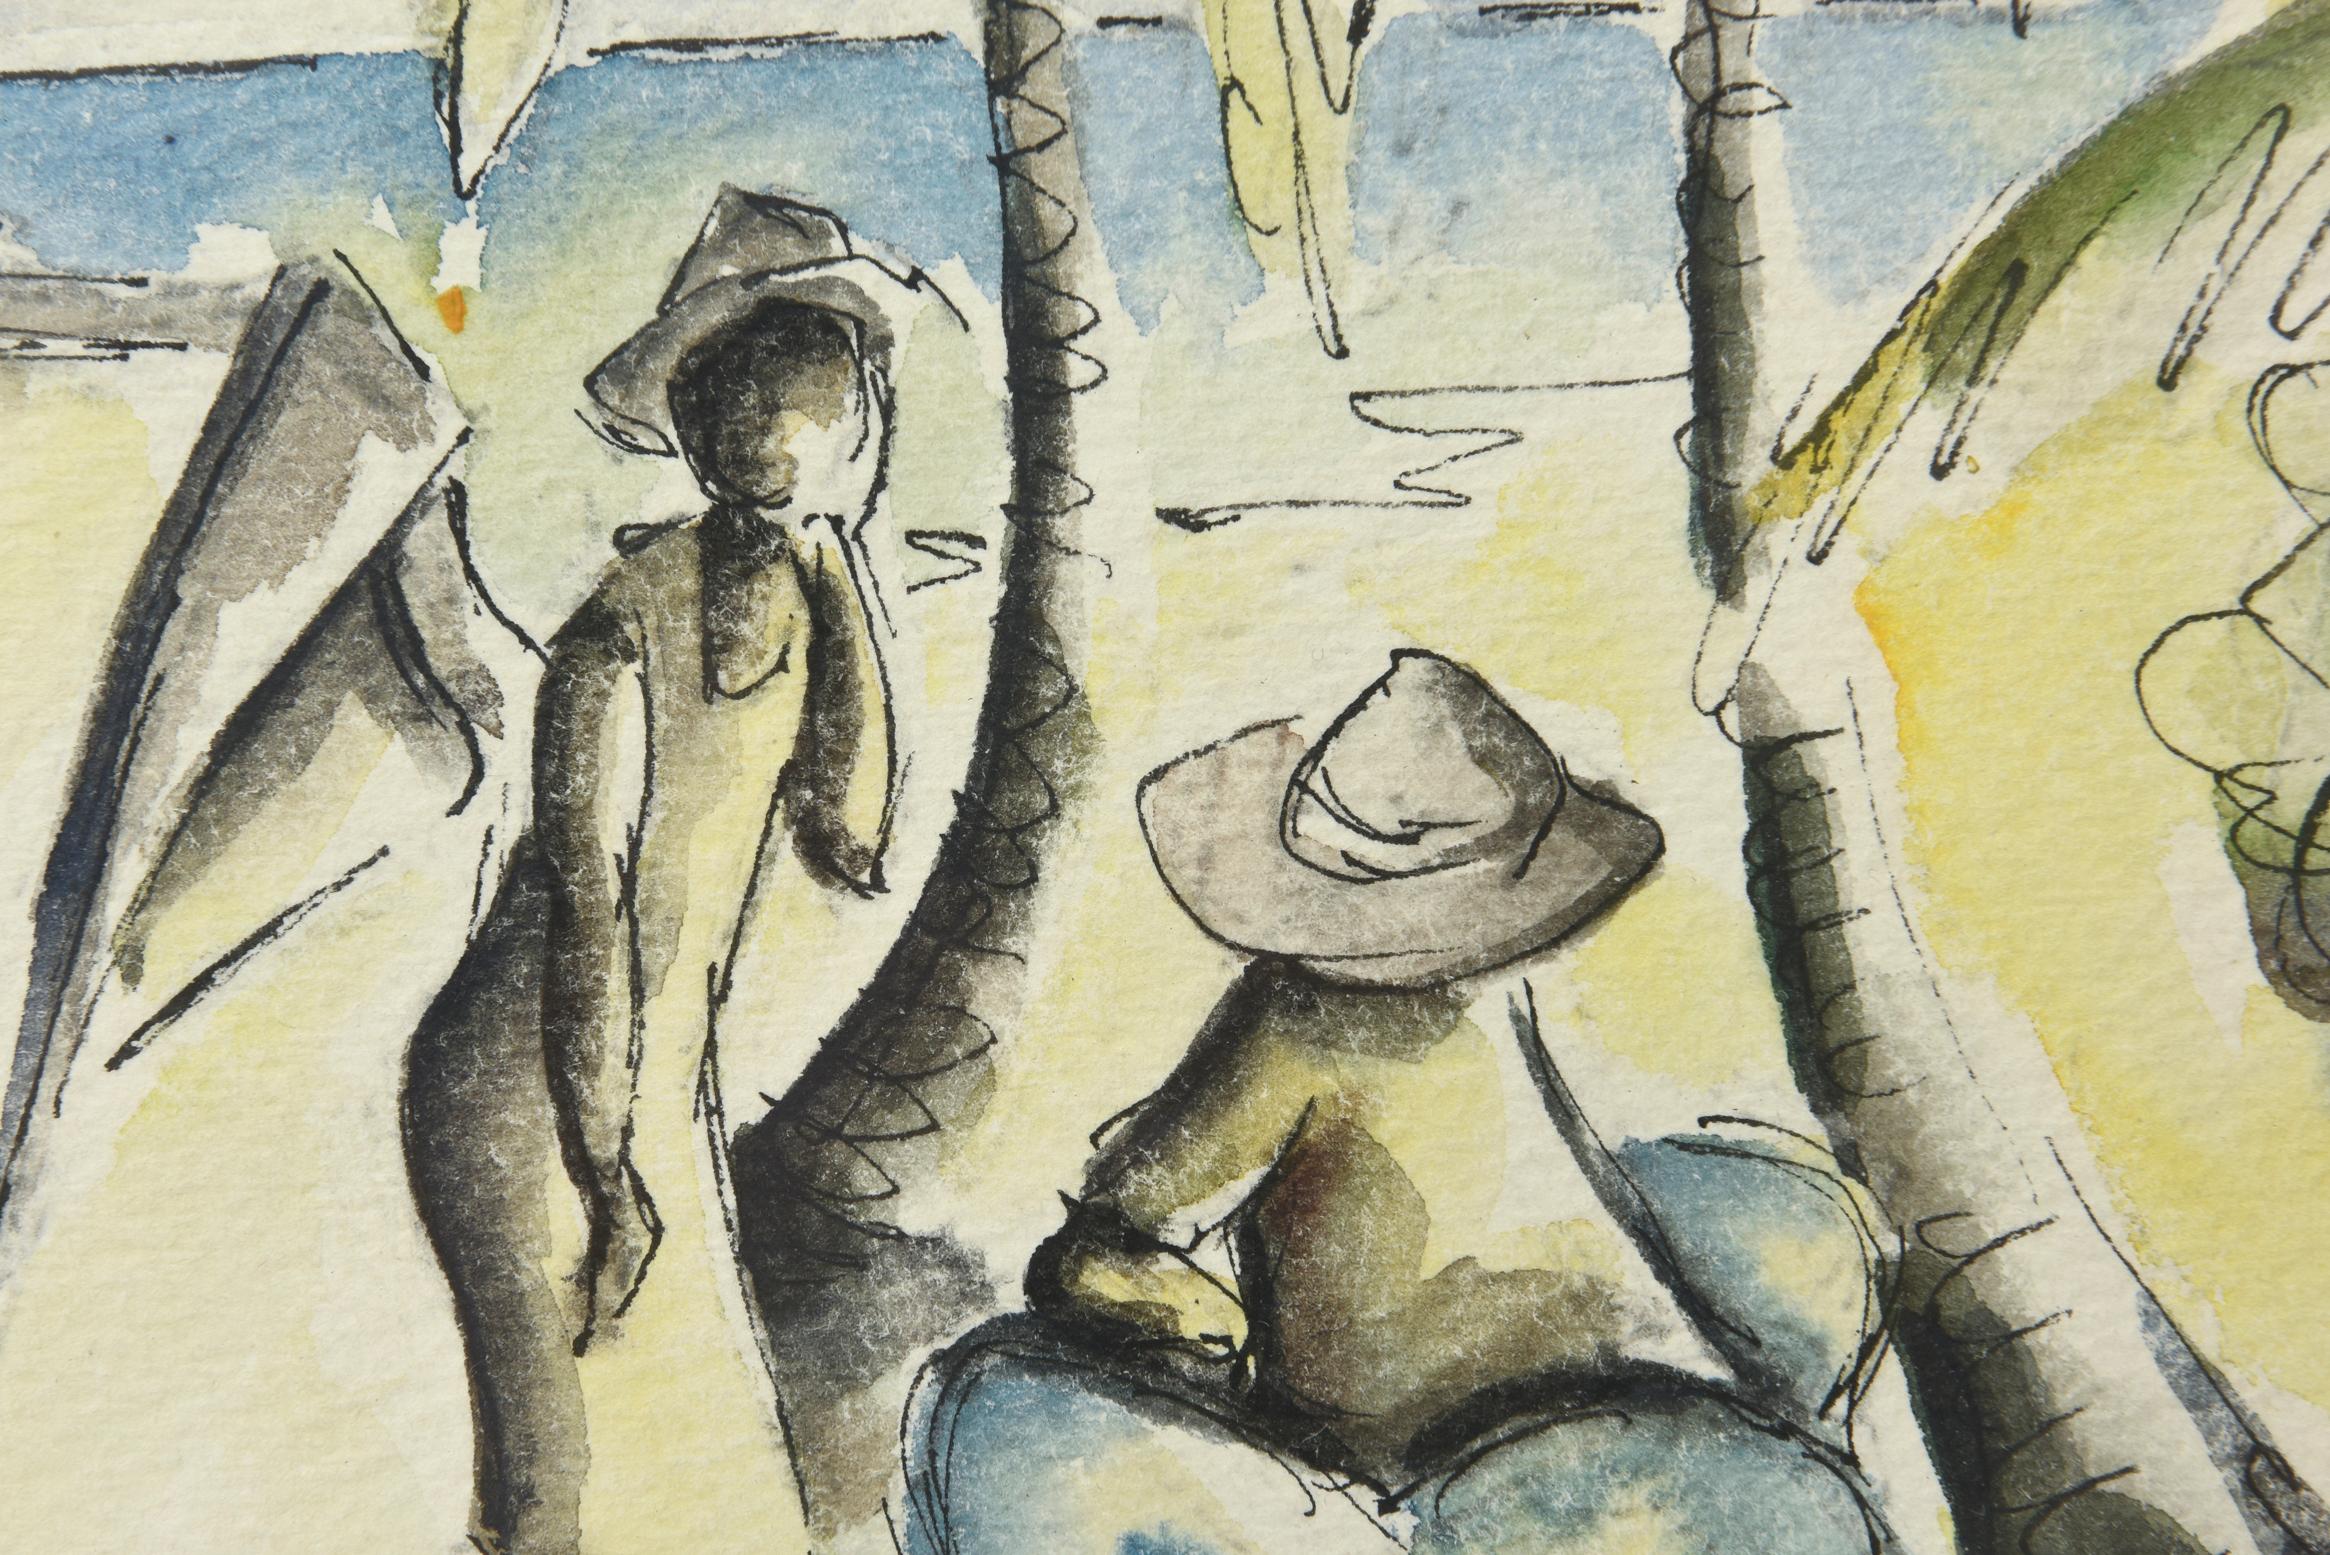 Bajan Pair of Watercolor and Ink Seaside Tropical Landscape Drawings Signed